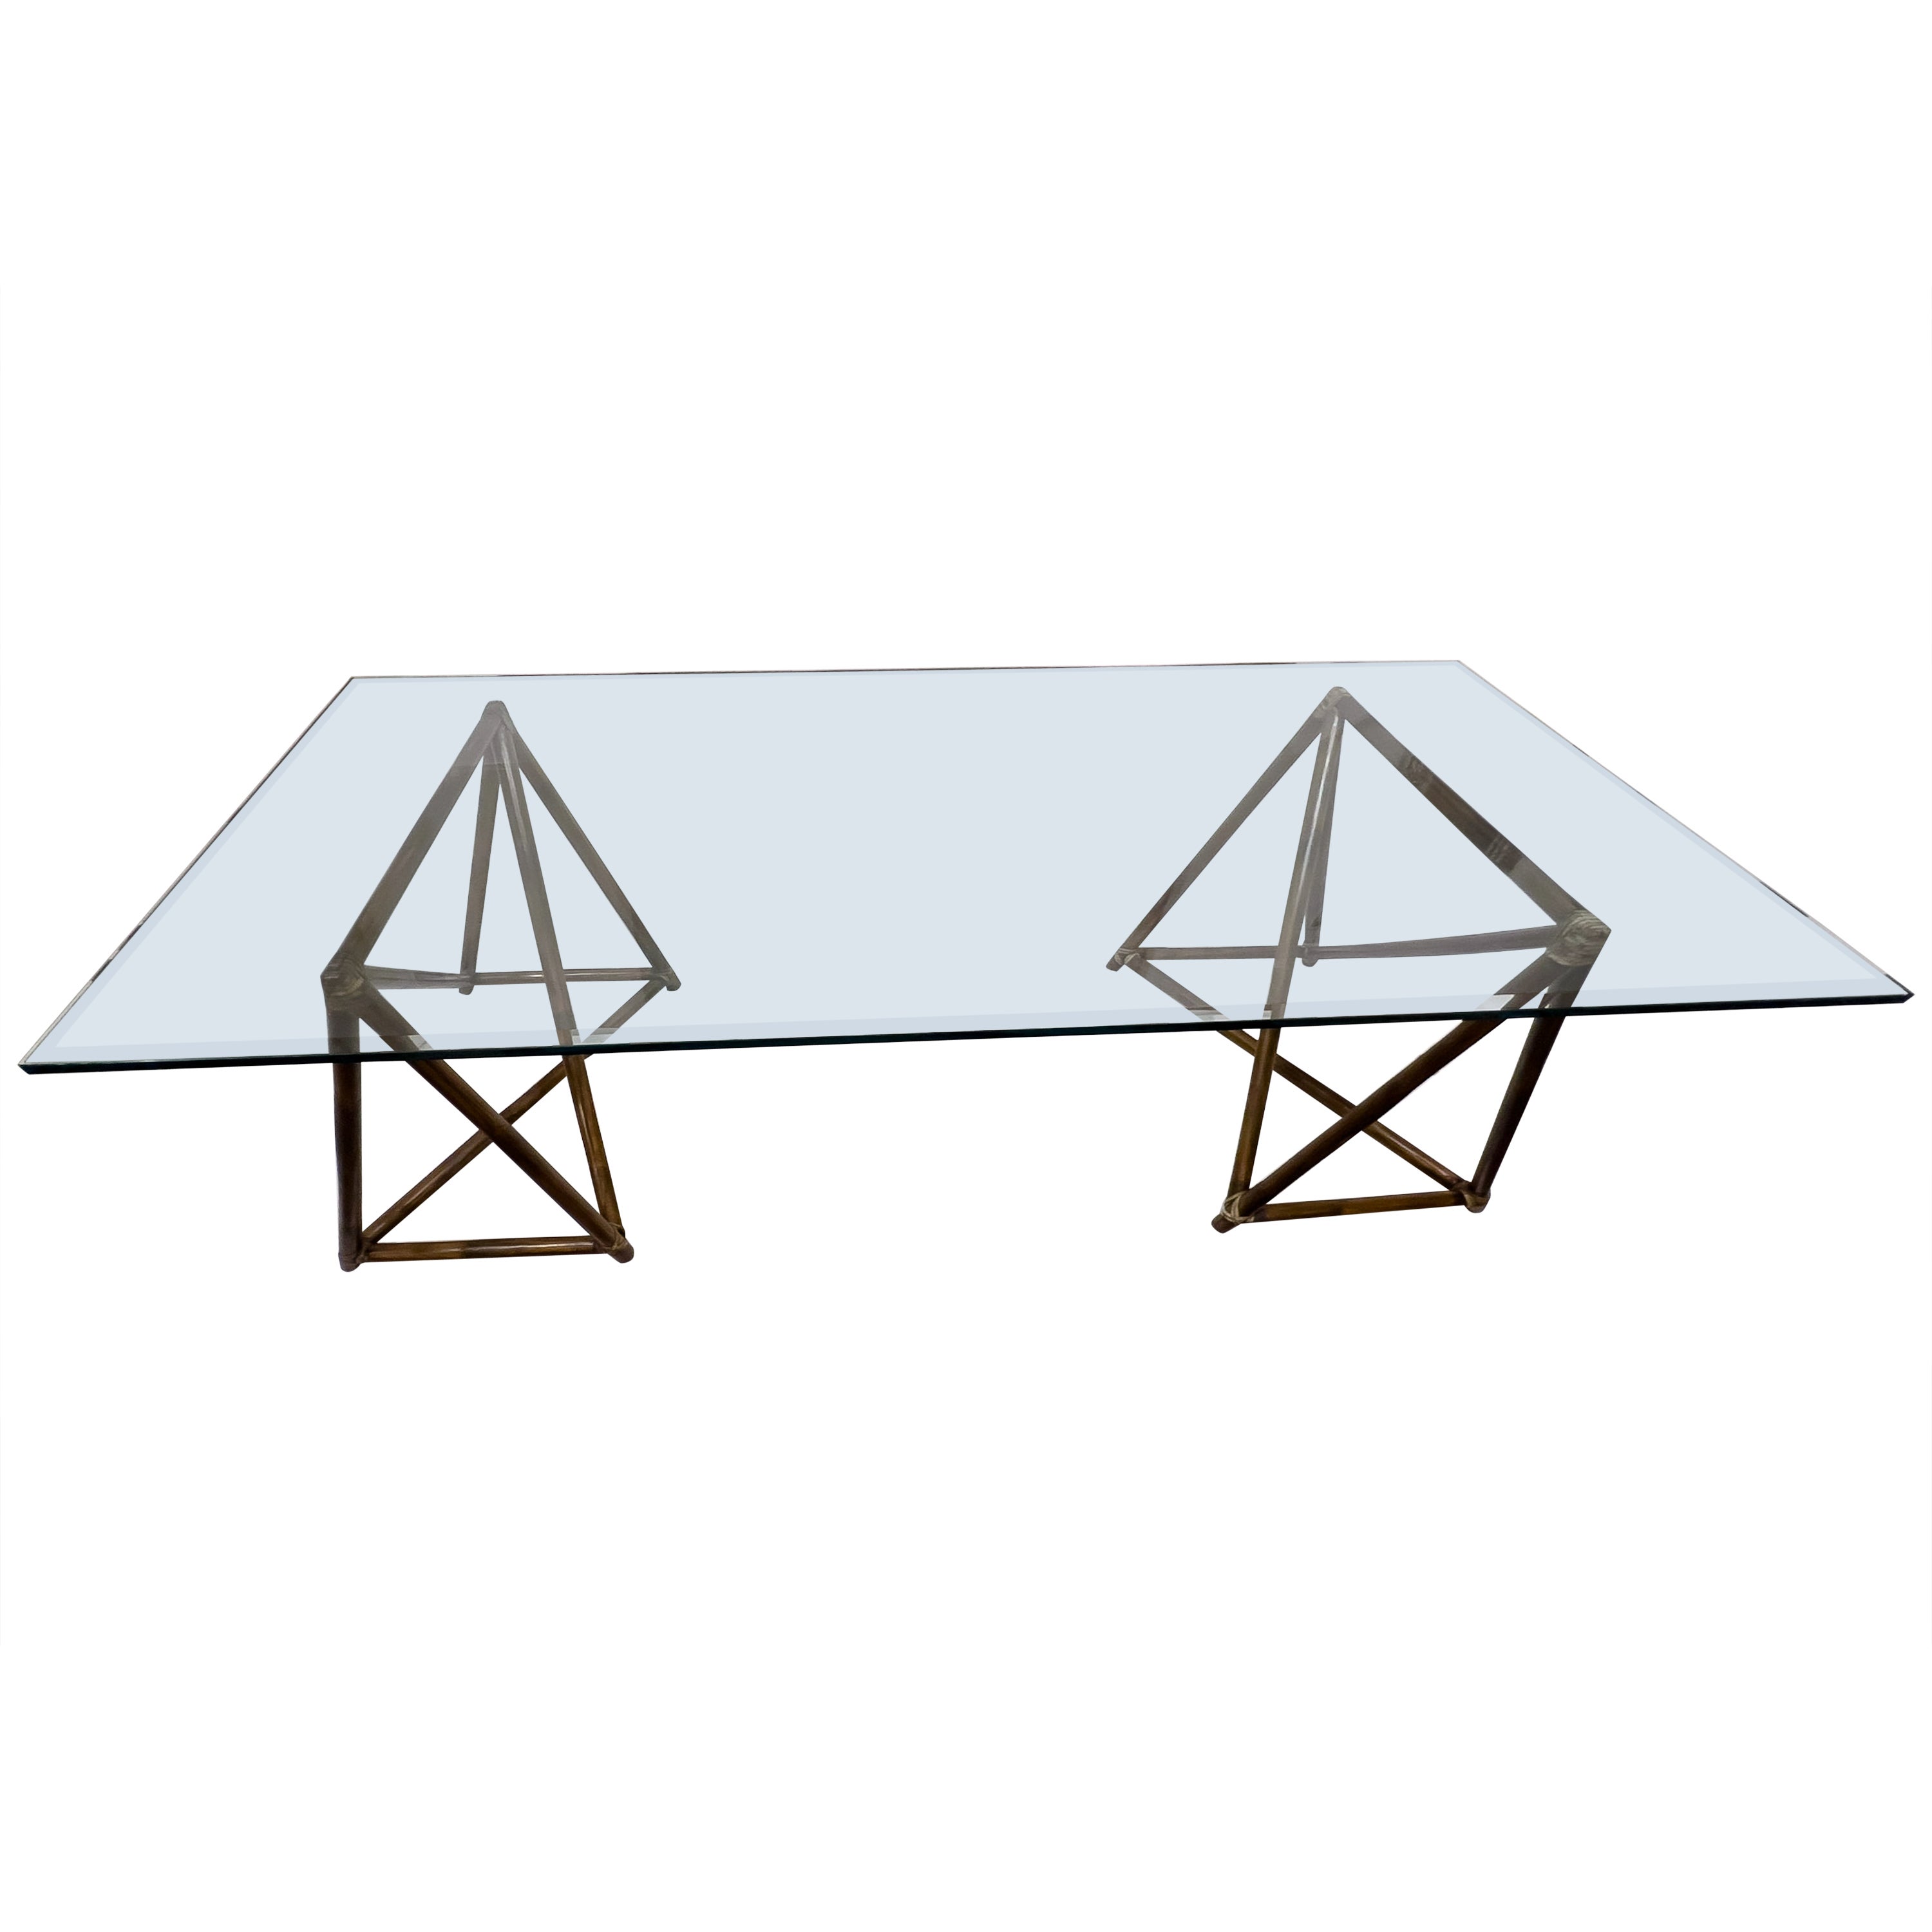 McGuire Geometric Rattan Pedestals for Table Console Desk Both Item Dimensions  